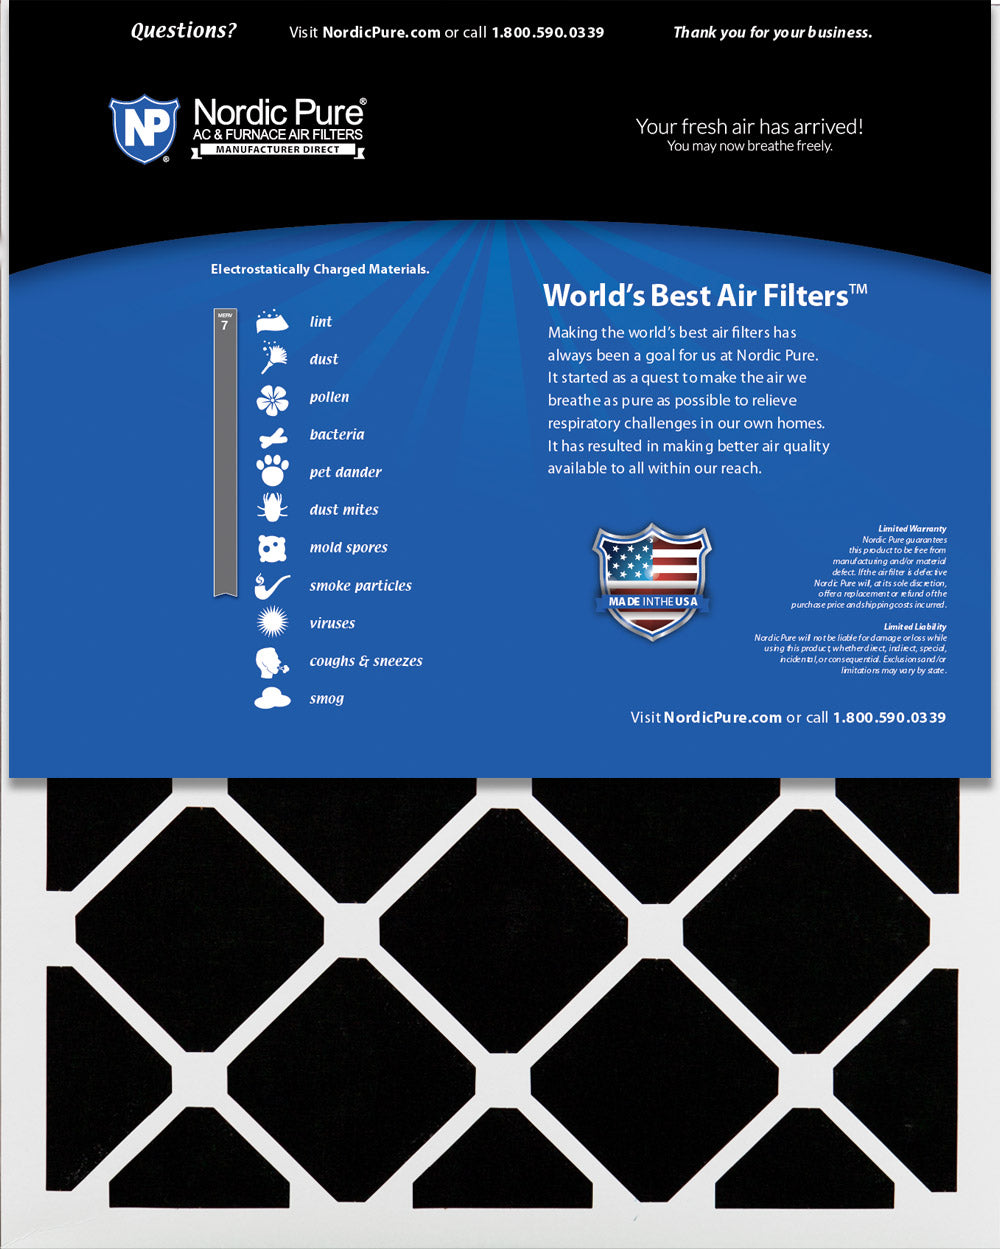 11 1/4x23 1/4x1 Exact MERV 7 Plus Carbon AC Furnace Filters 